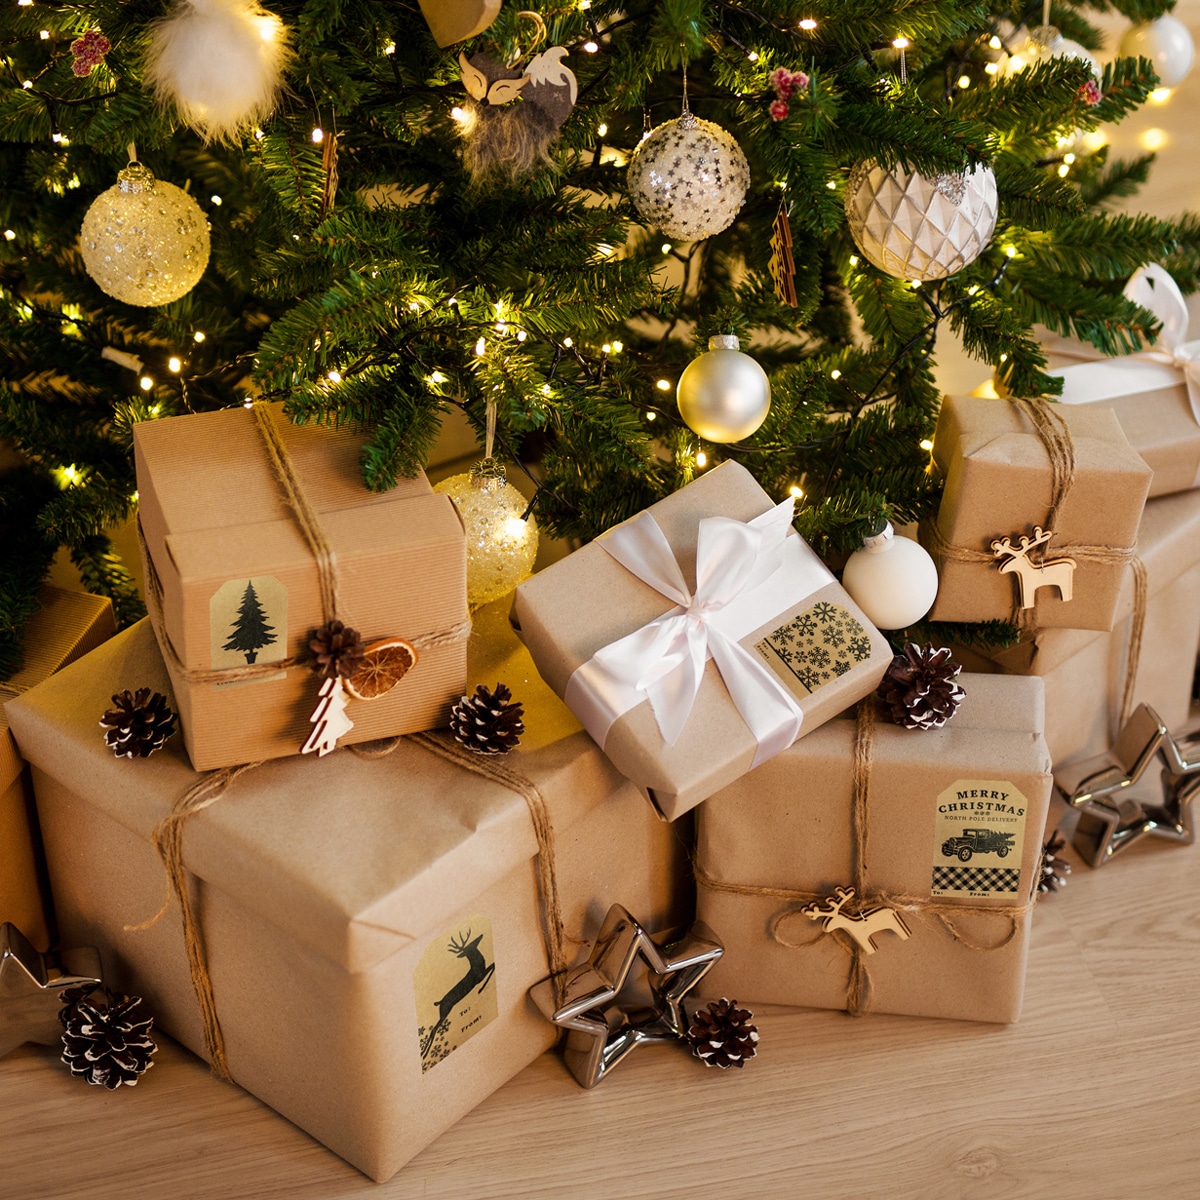 Destination Holiday Festive Christmas Adhesive Gift Tags - Shop Gift Wrap  at H-E-B